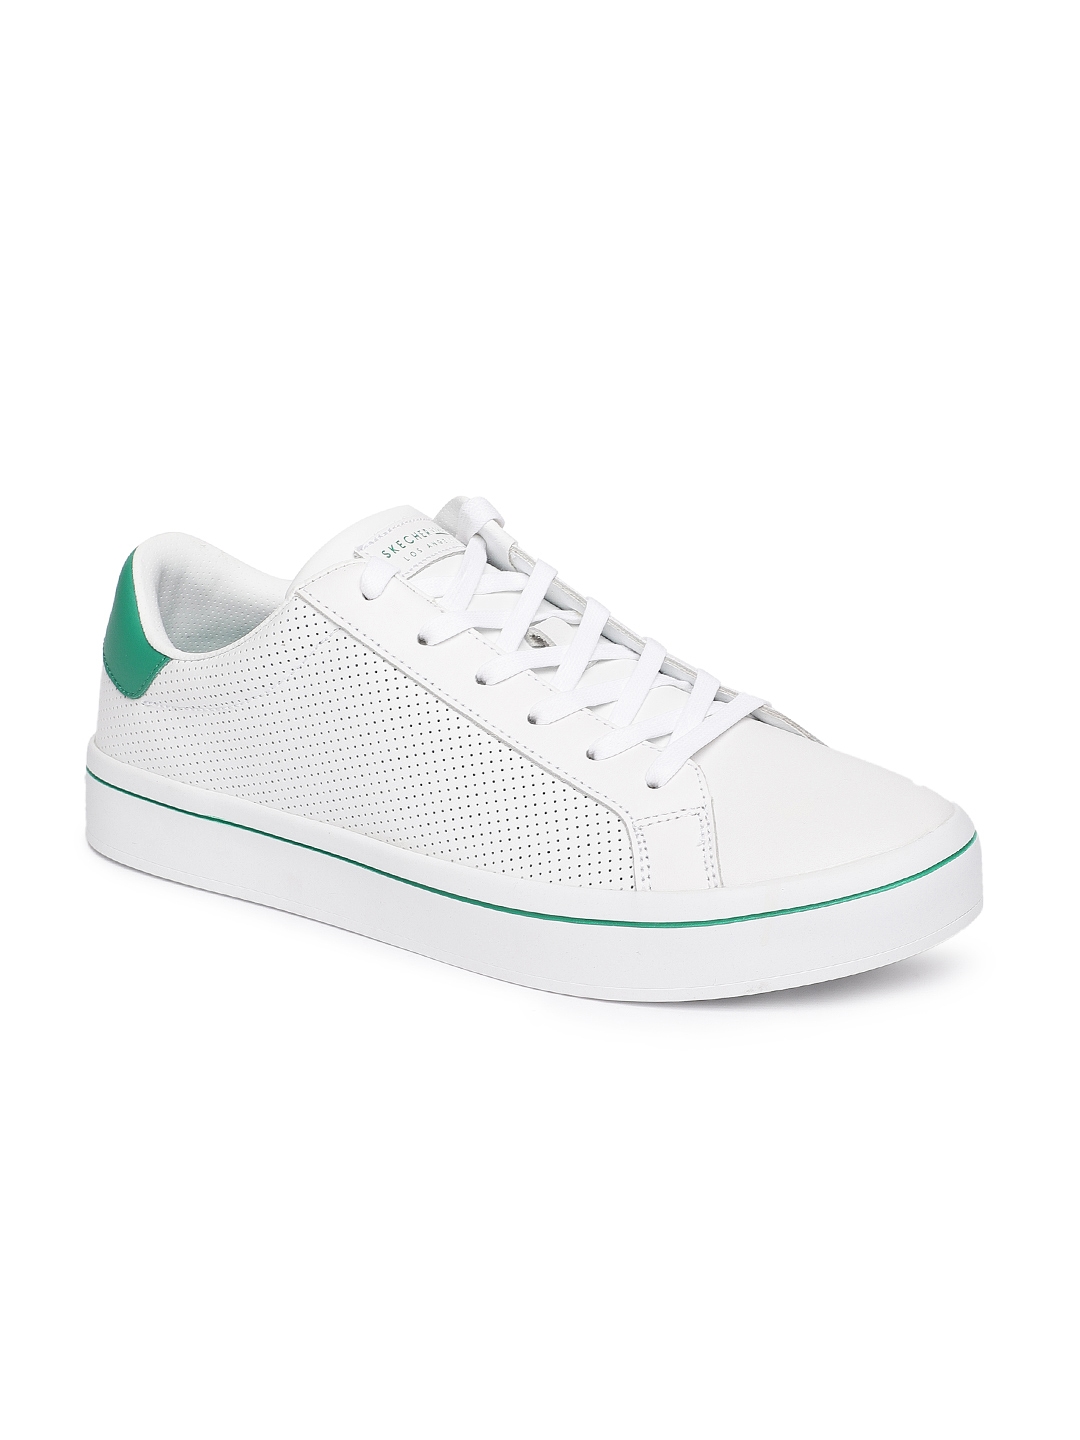 Buy Skechers Men White Sneakers 